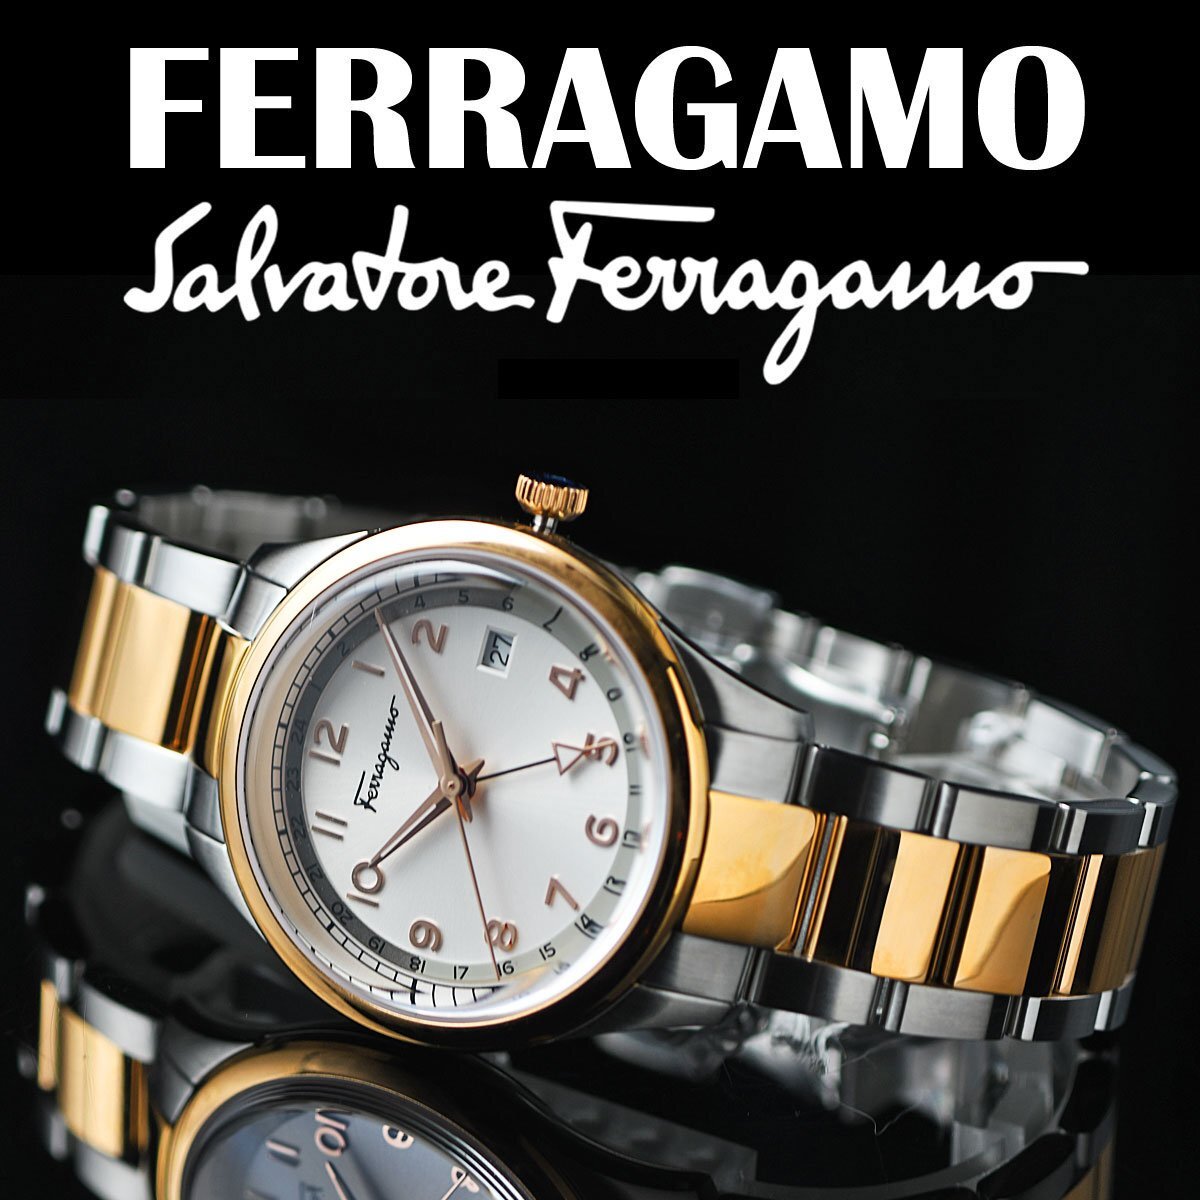  new goods 1 jpy Ferragamo high class Italy brand no. 2 hour display GMT with function Switzerland made wristwatch 50m waterproof sapphire glass FERRAGAMO men's unused genuine article 